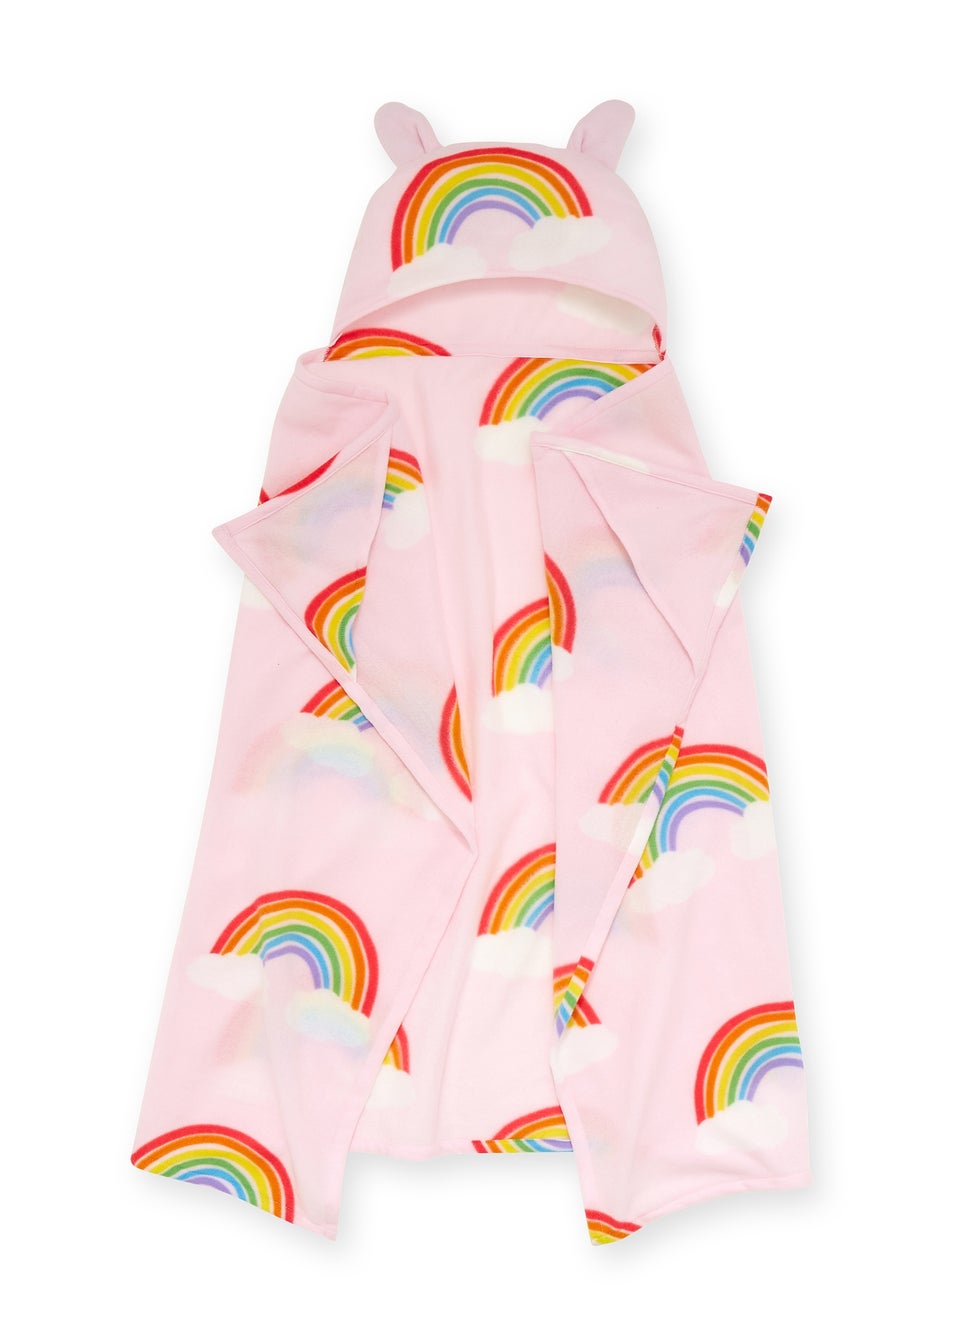 Catherine Lansfield Уютное флисовое одеяло с капюшоном Rainbow Hearts, розовый уютное флисовое одеяло премиум класса american cocker spaniel шерпа с 3d принтом одеяло на кровать домашний текстиль